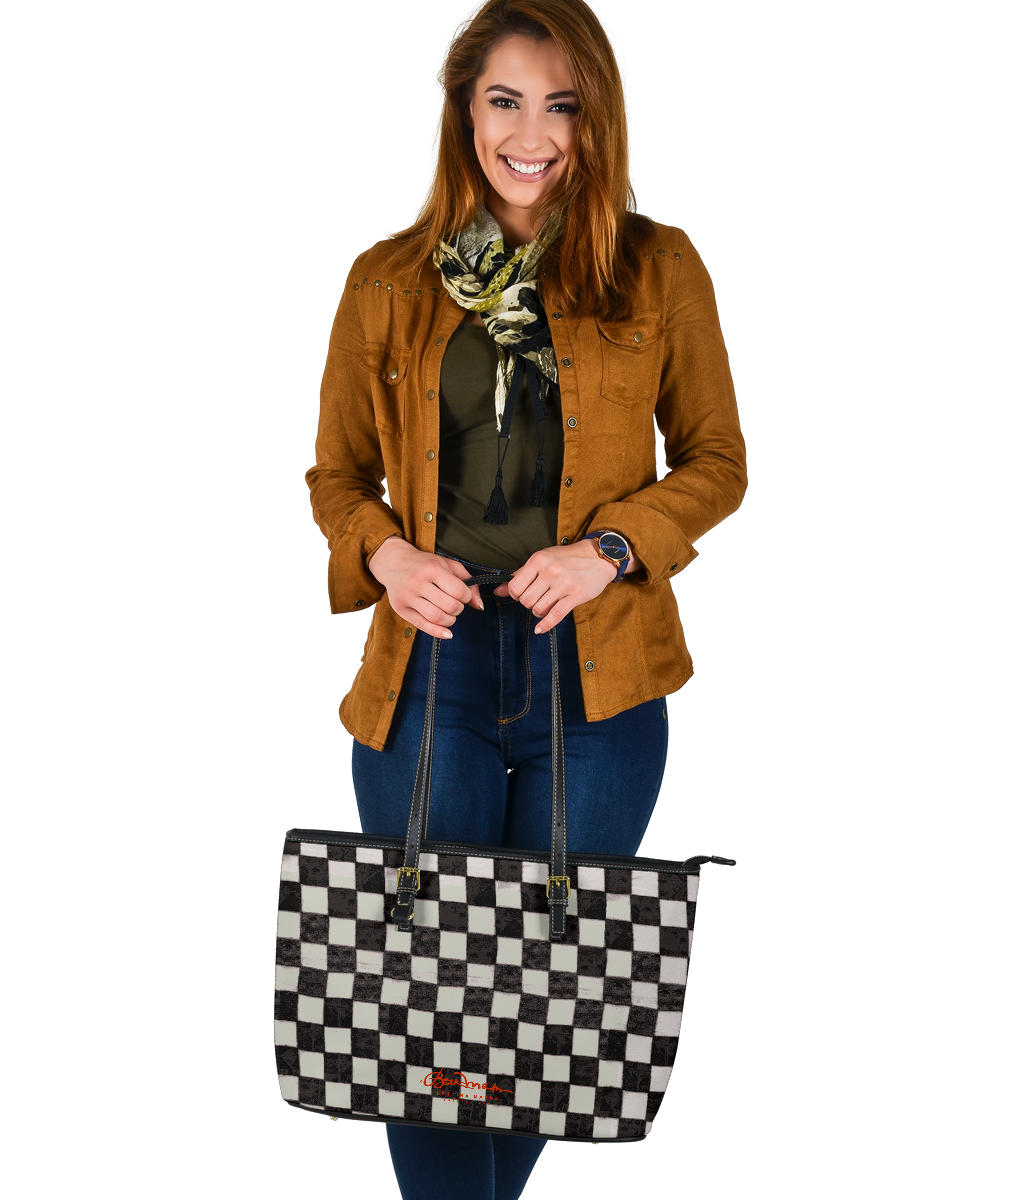 B&W Checkerboard Large Tote Bag